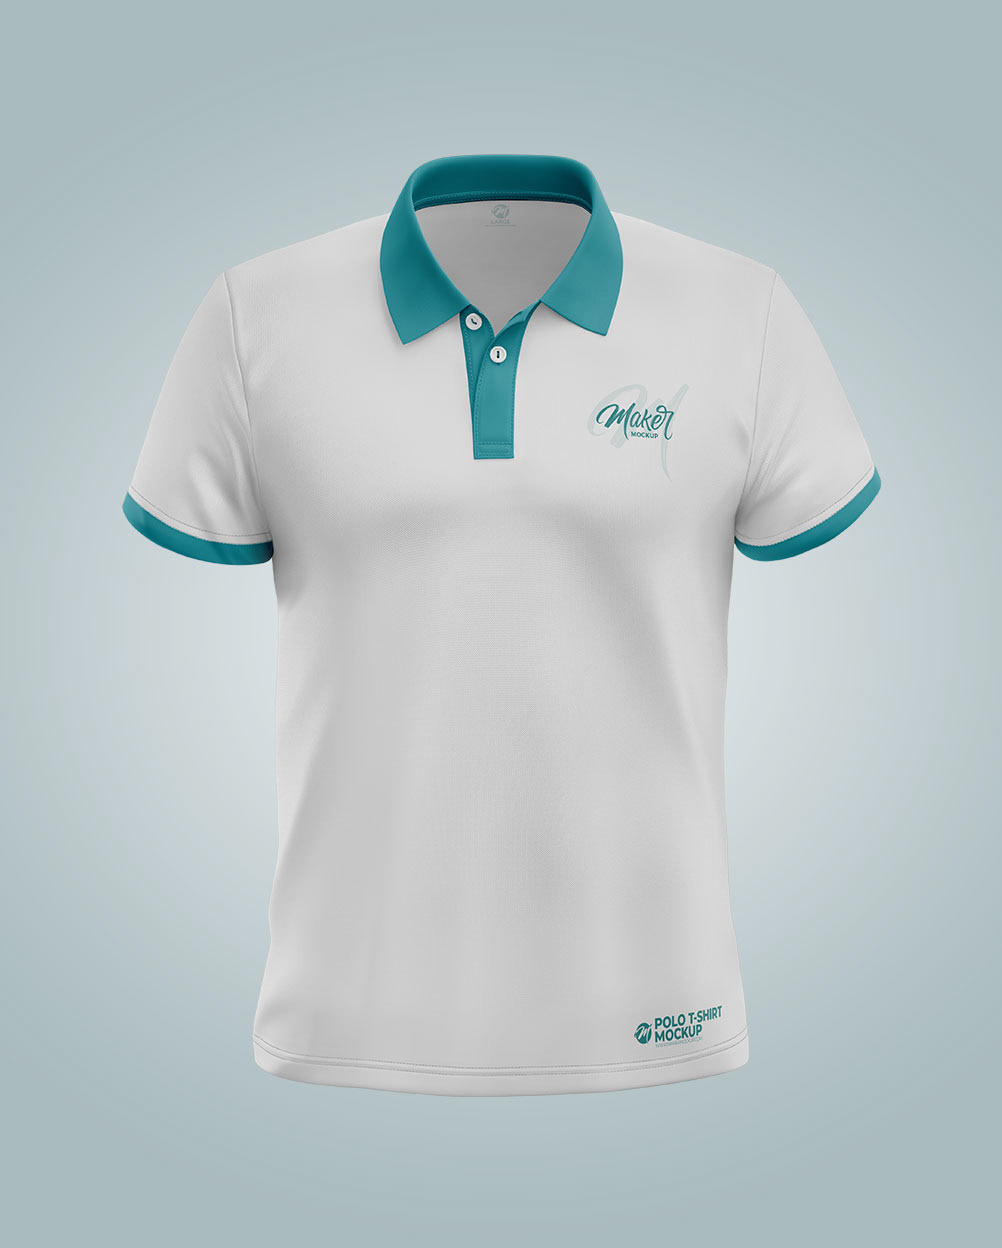 Polo T-shirt Mockup – Mockup Camisa Polo on Behance